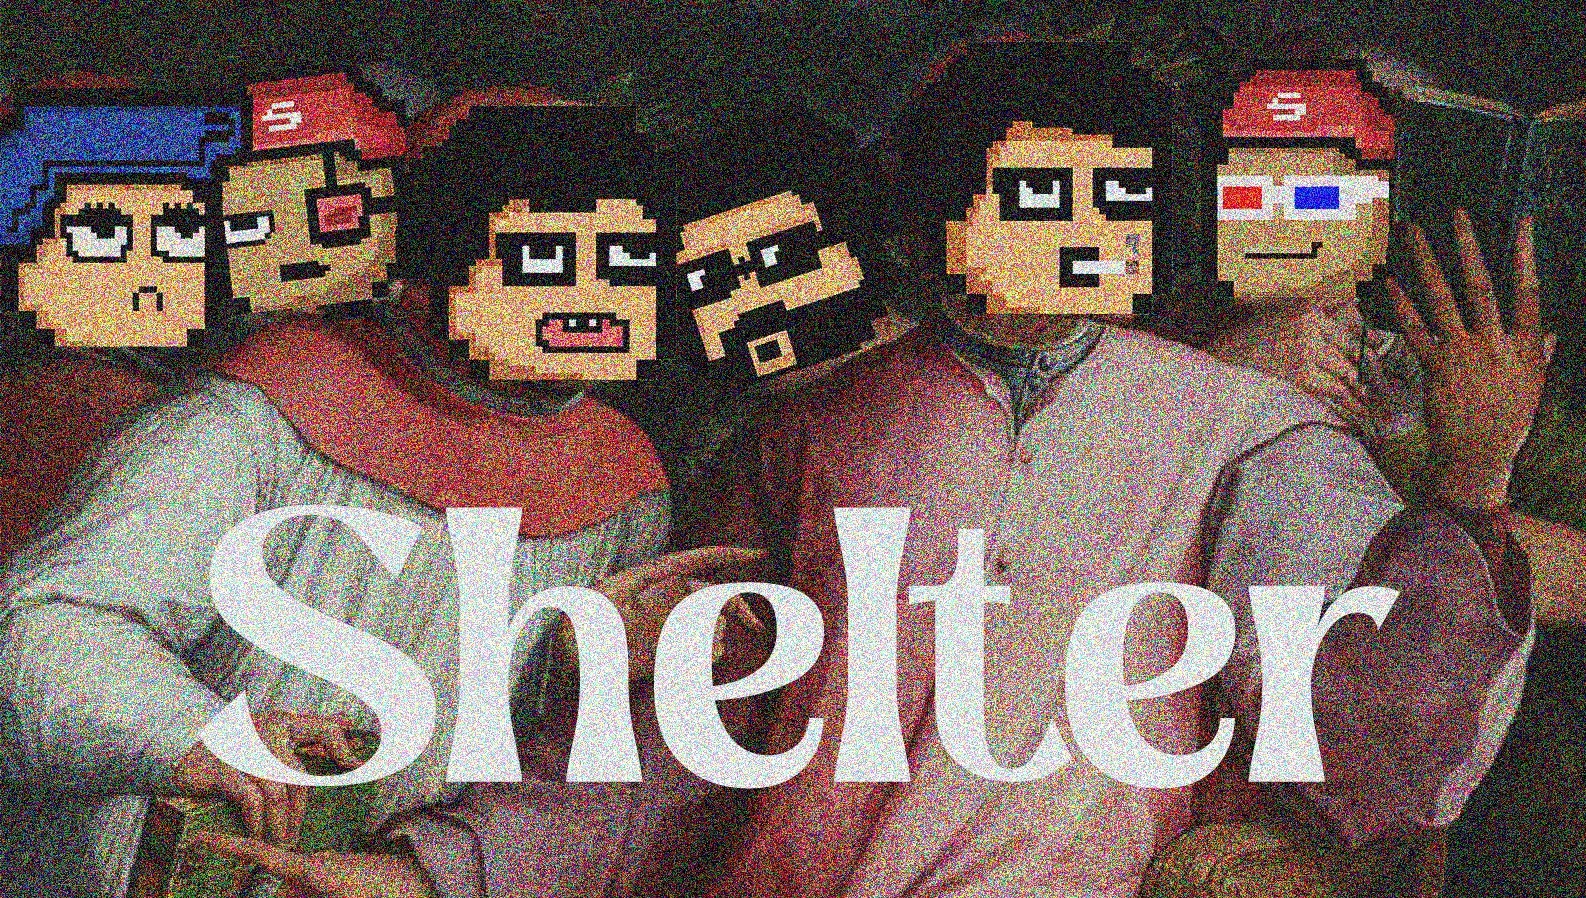 The Shelter Gen-one banner